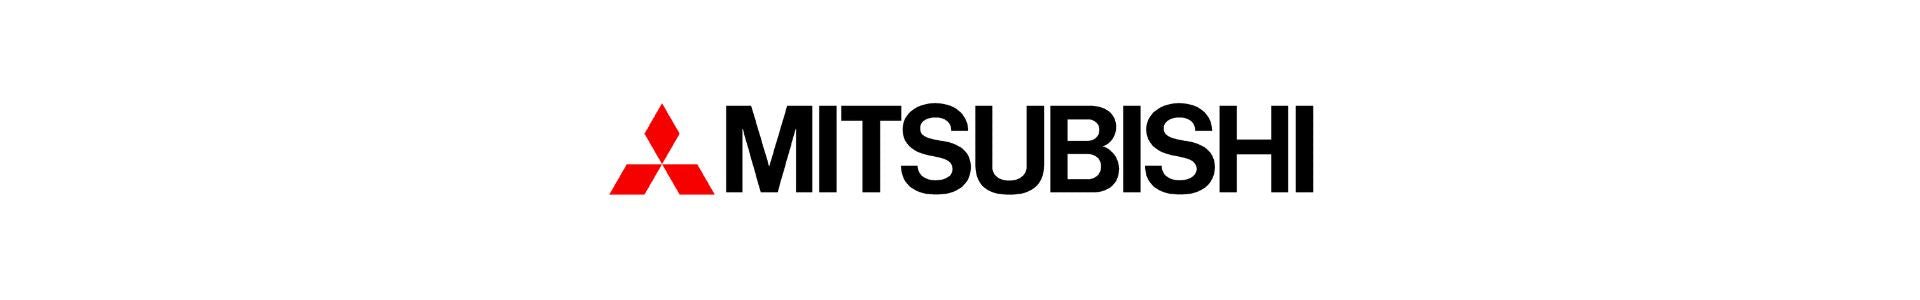 Mitsubishi - Radius Fabrications